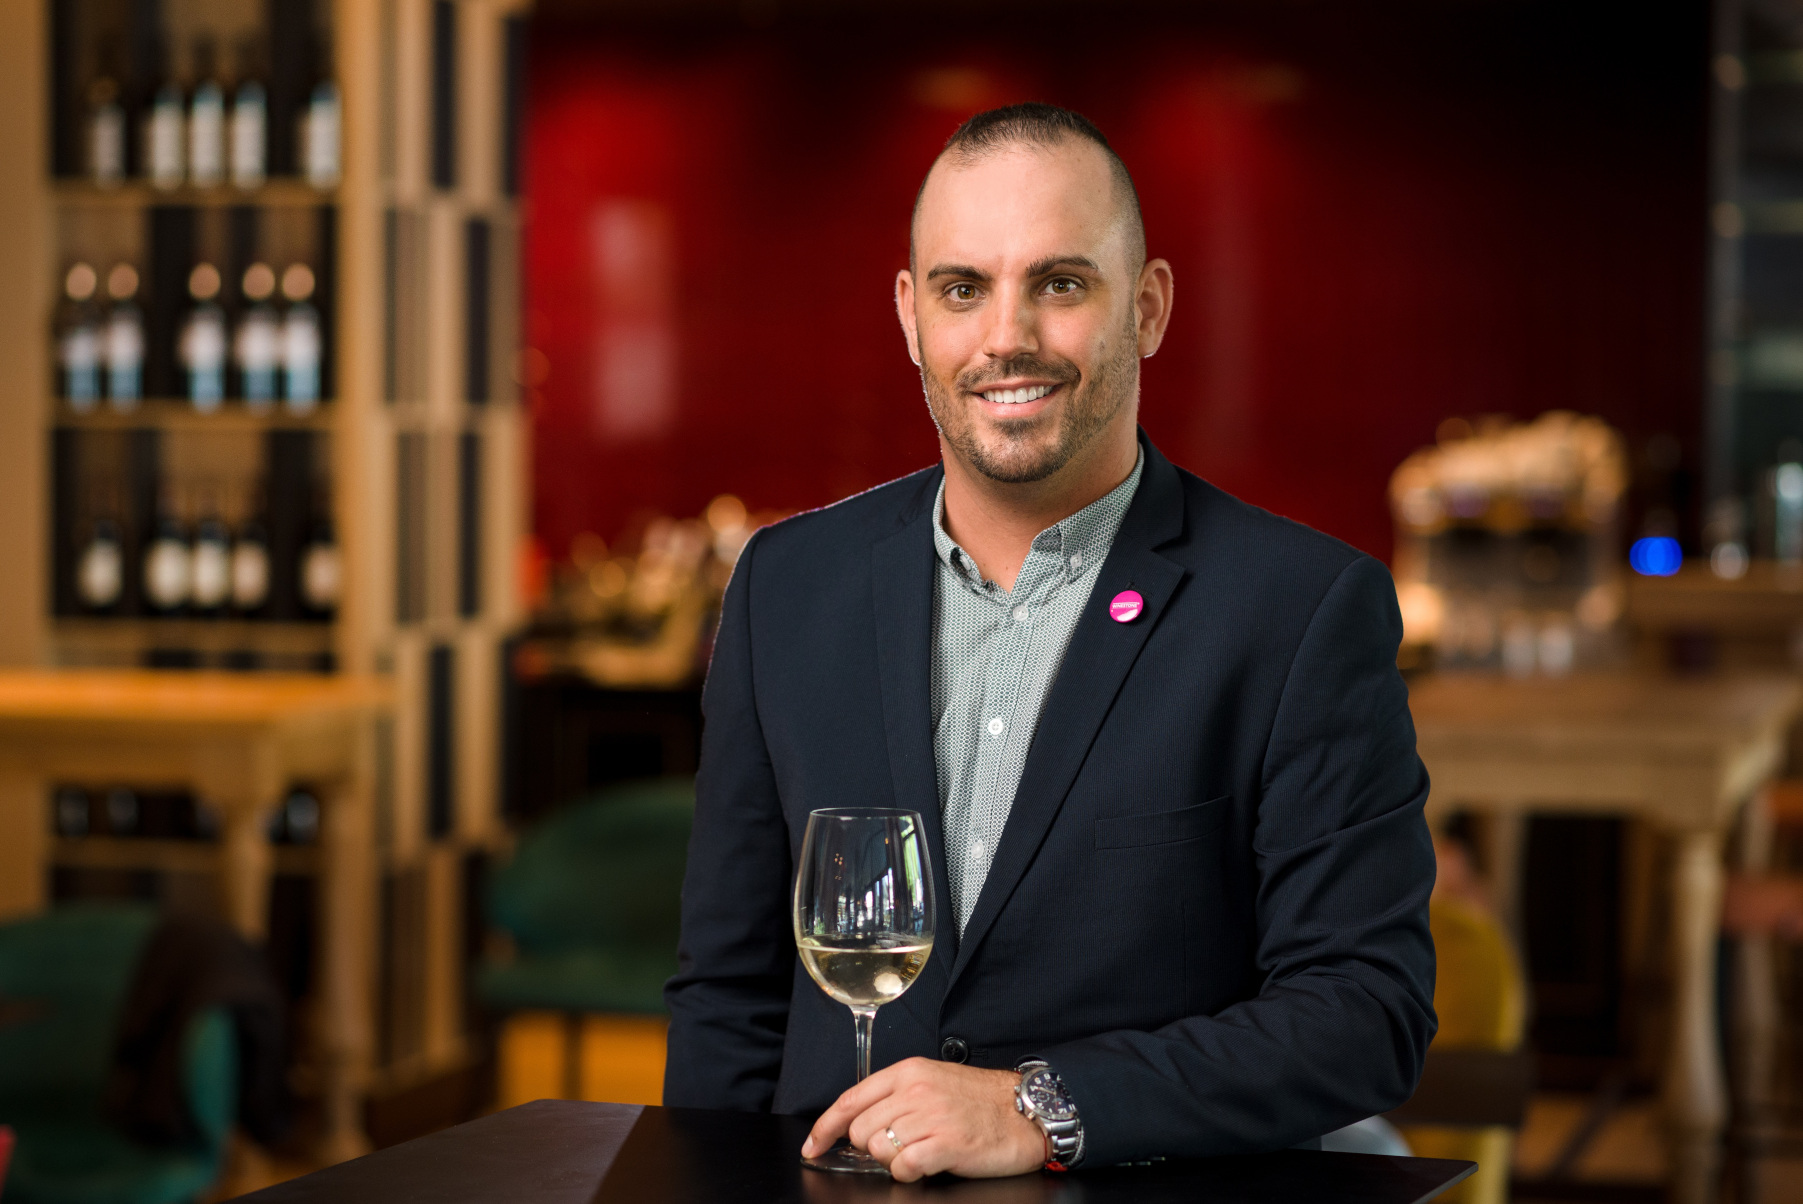 Daniel Erdei, Manager of Winestone Restaurant in Budapest